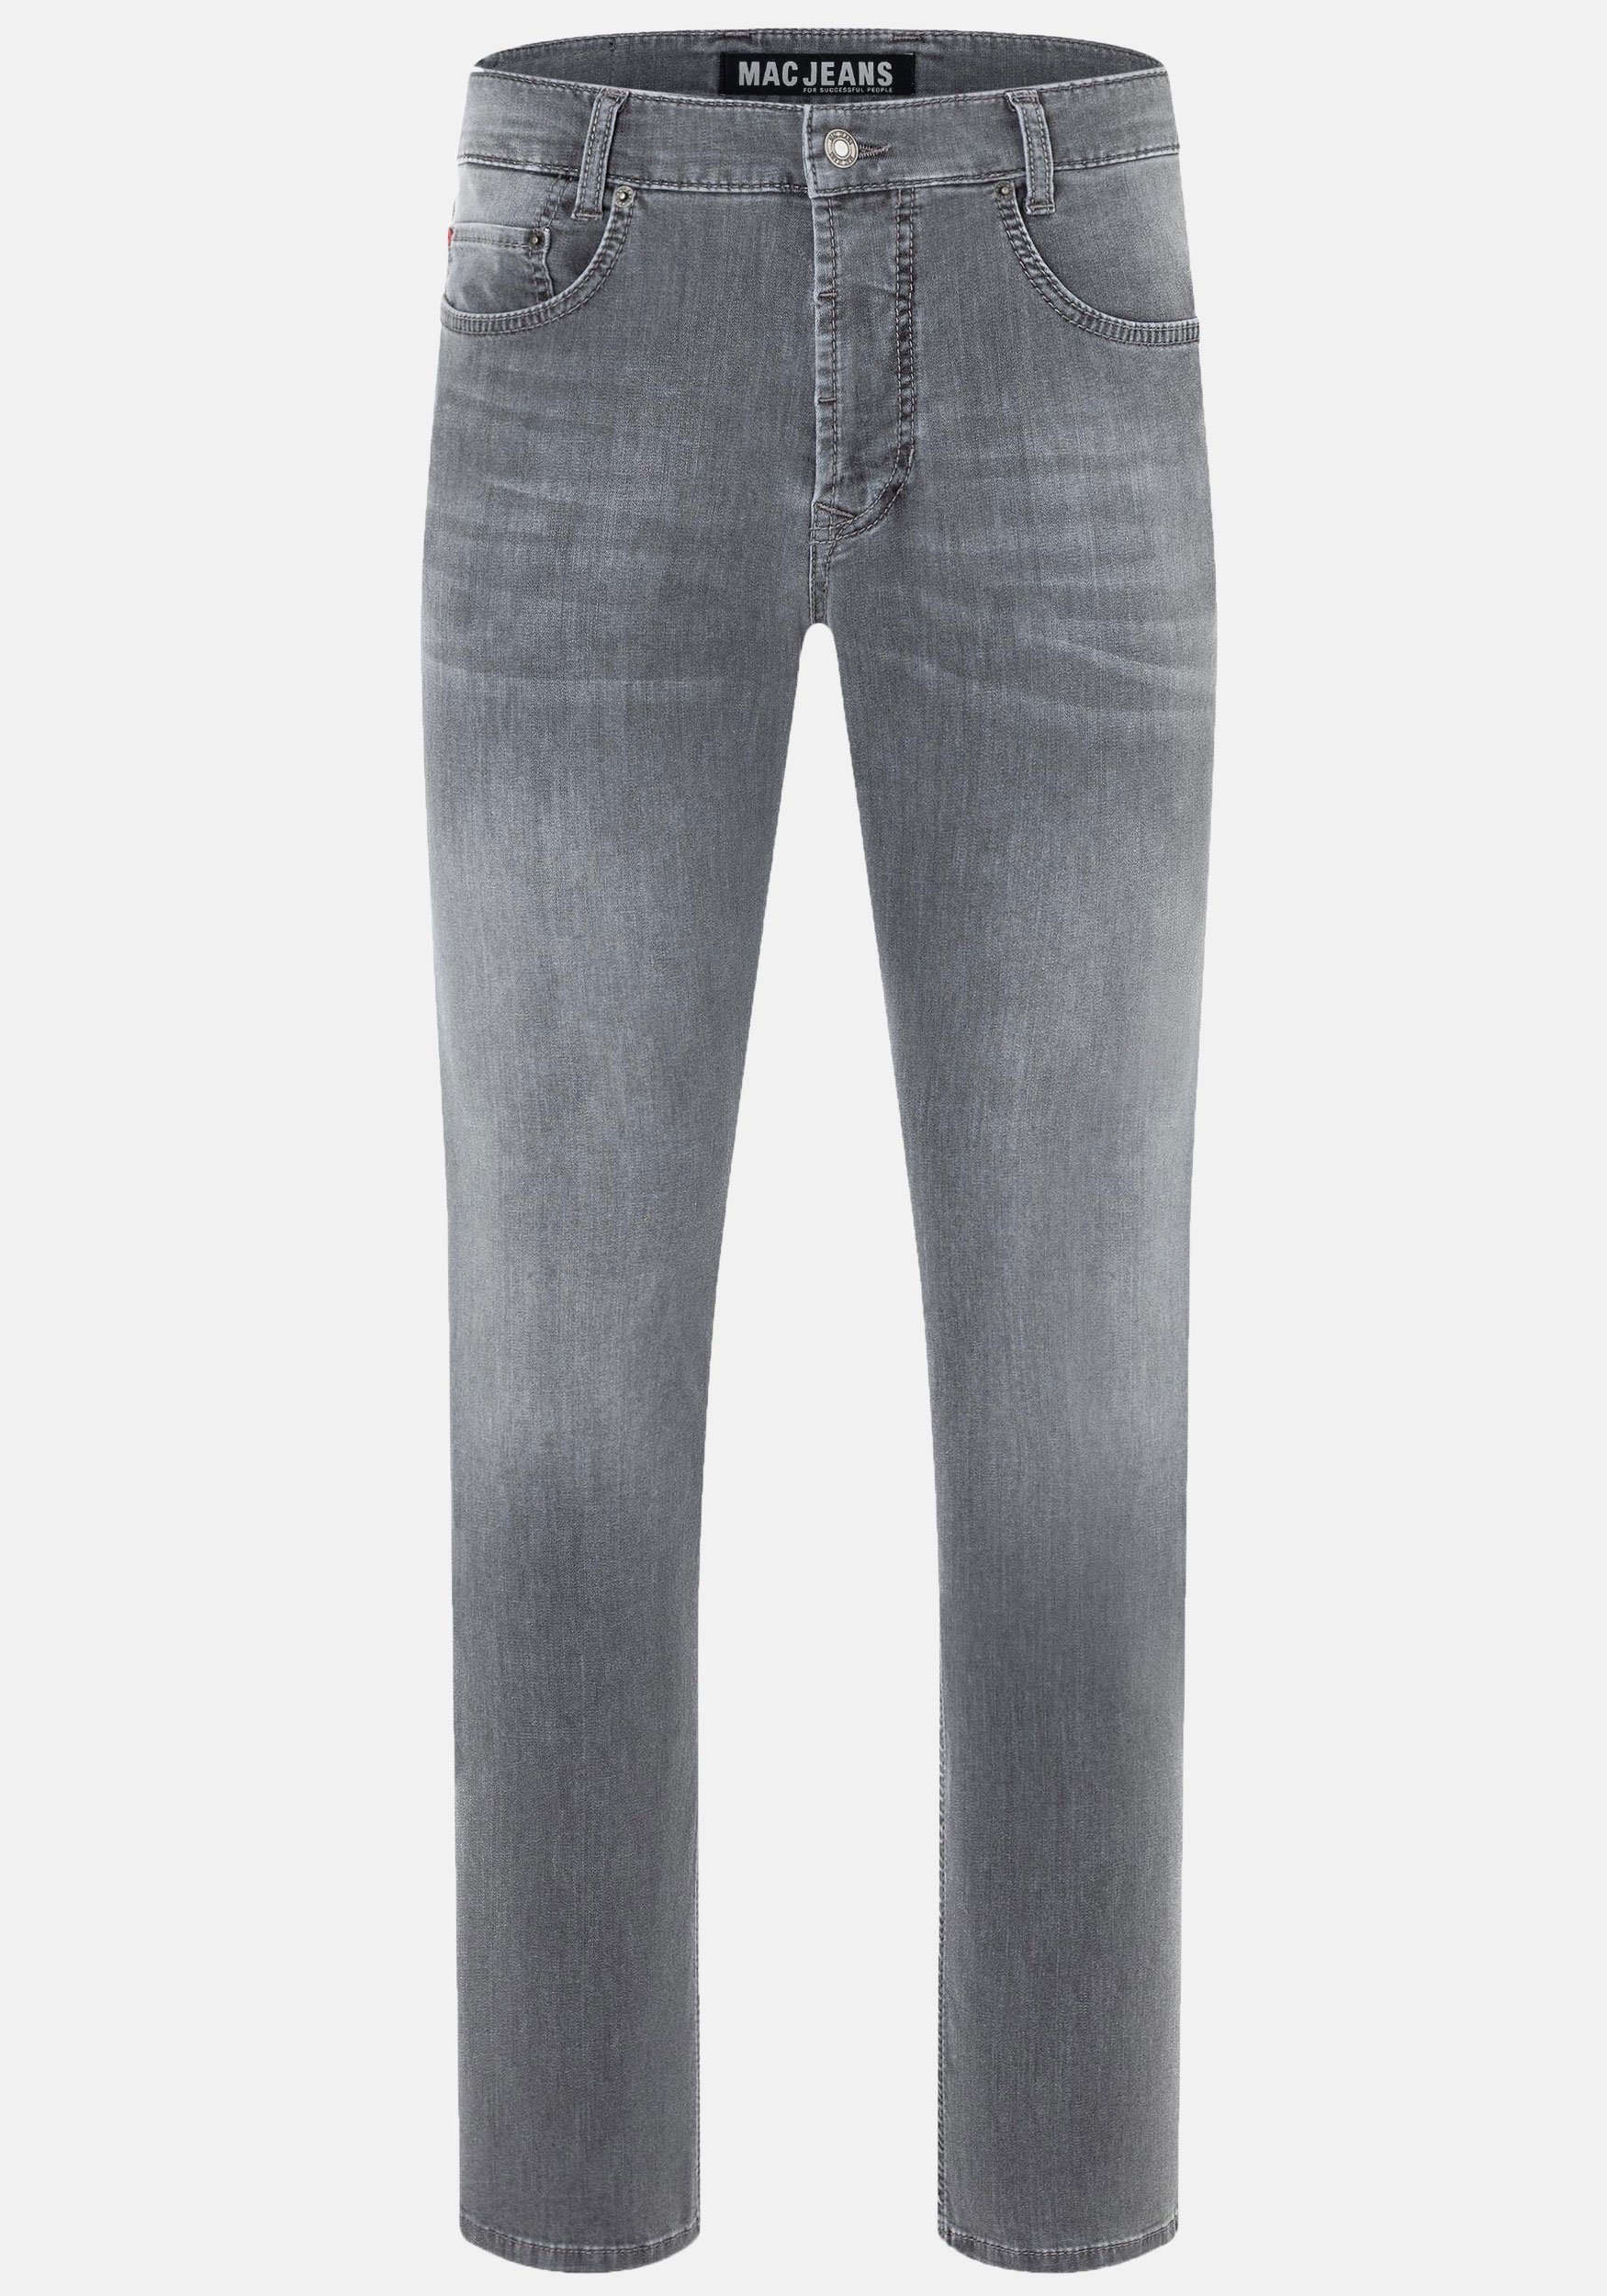 MAC 5-Pocket-Jeans Arne Light Weight Denim, leichte Sommerjeans H810 Summer Grey Used